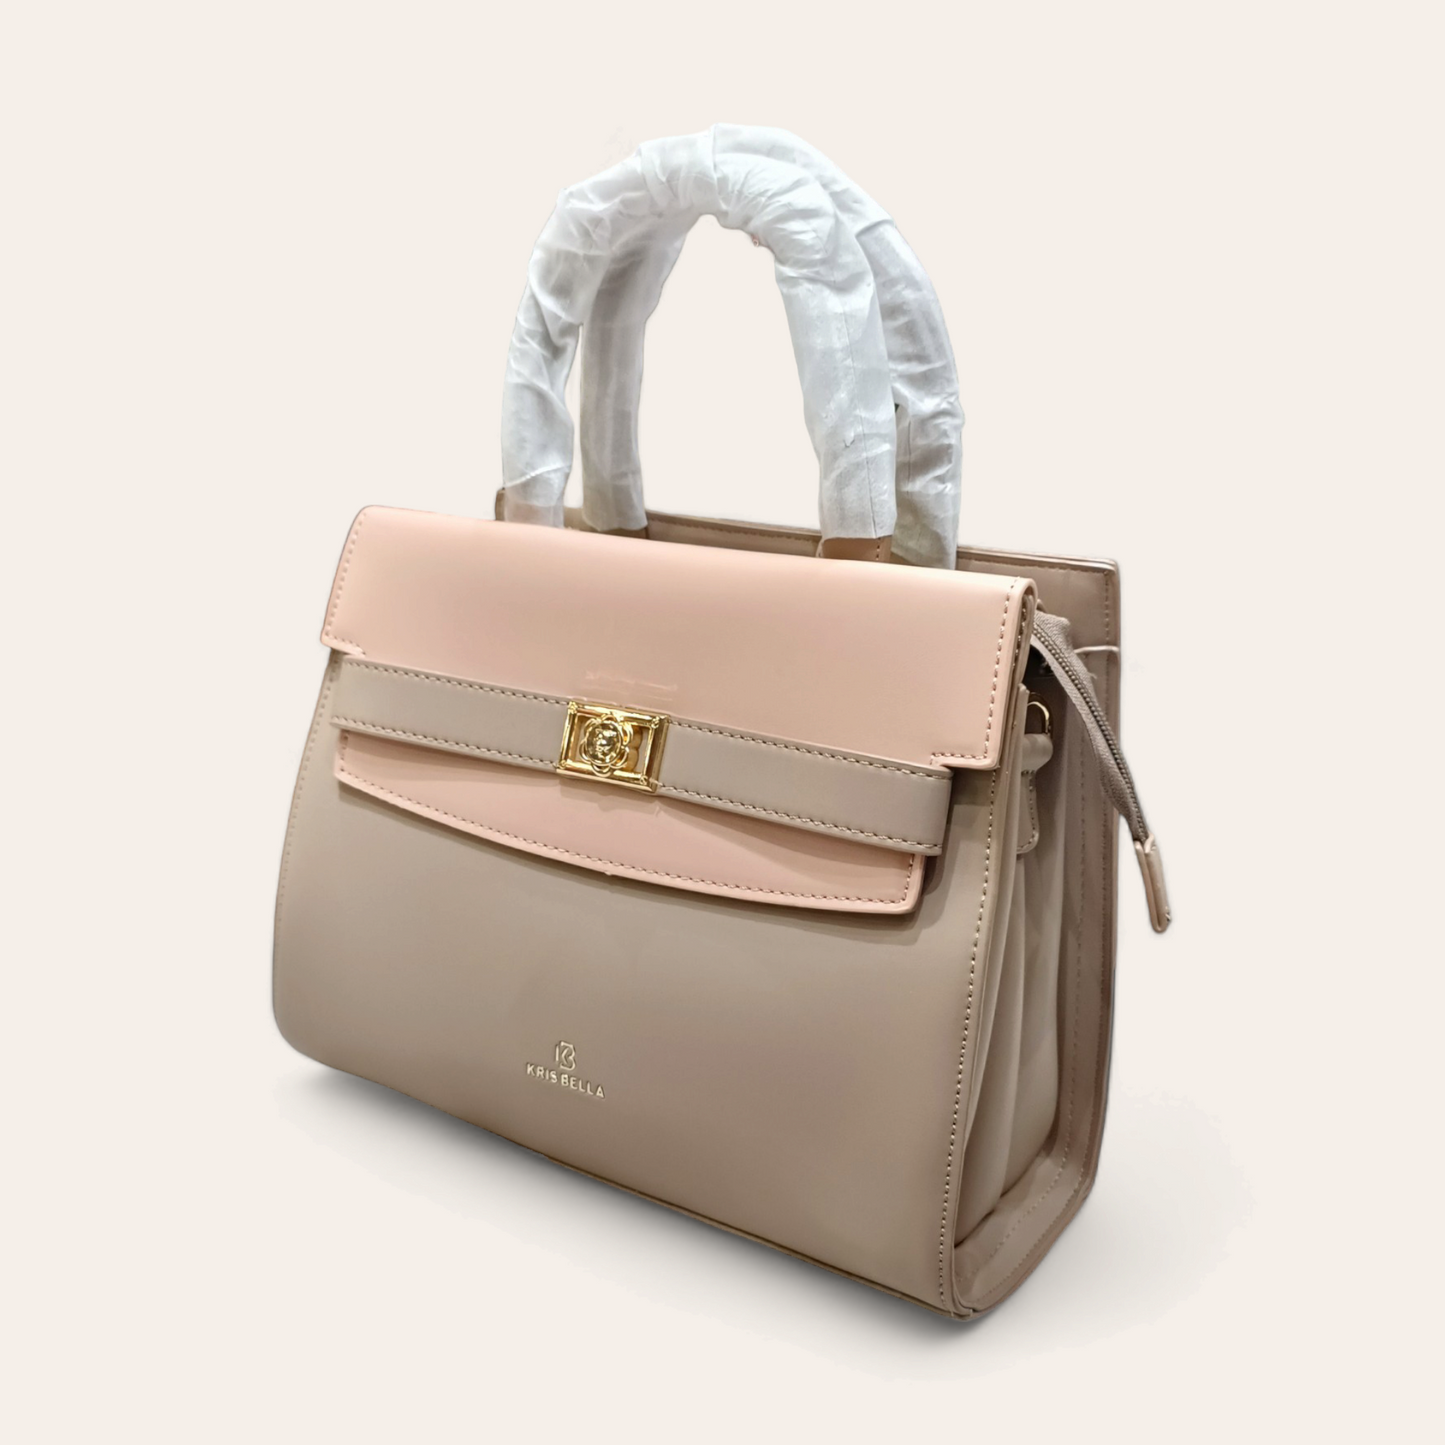 Premium Kris Bella Handbag with sling belt and more than 3 compartment